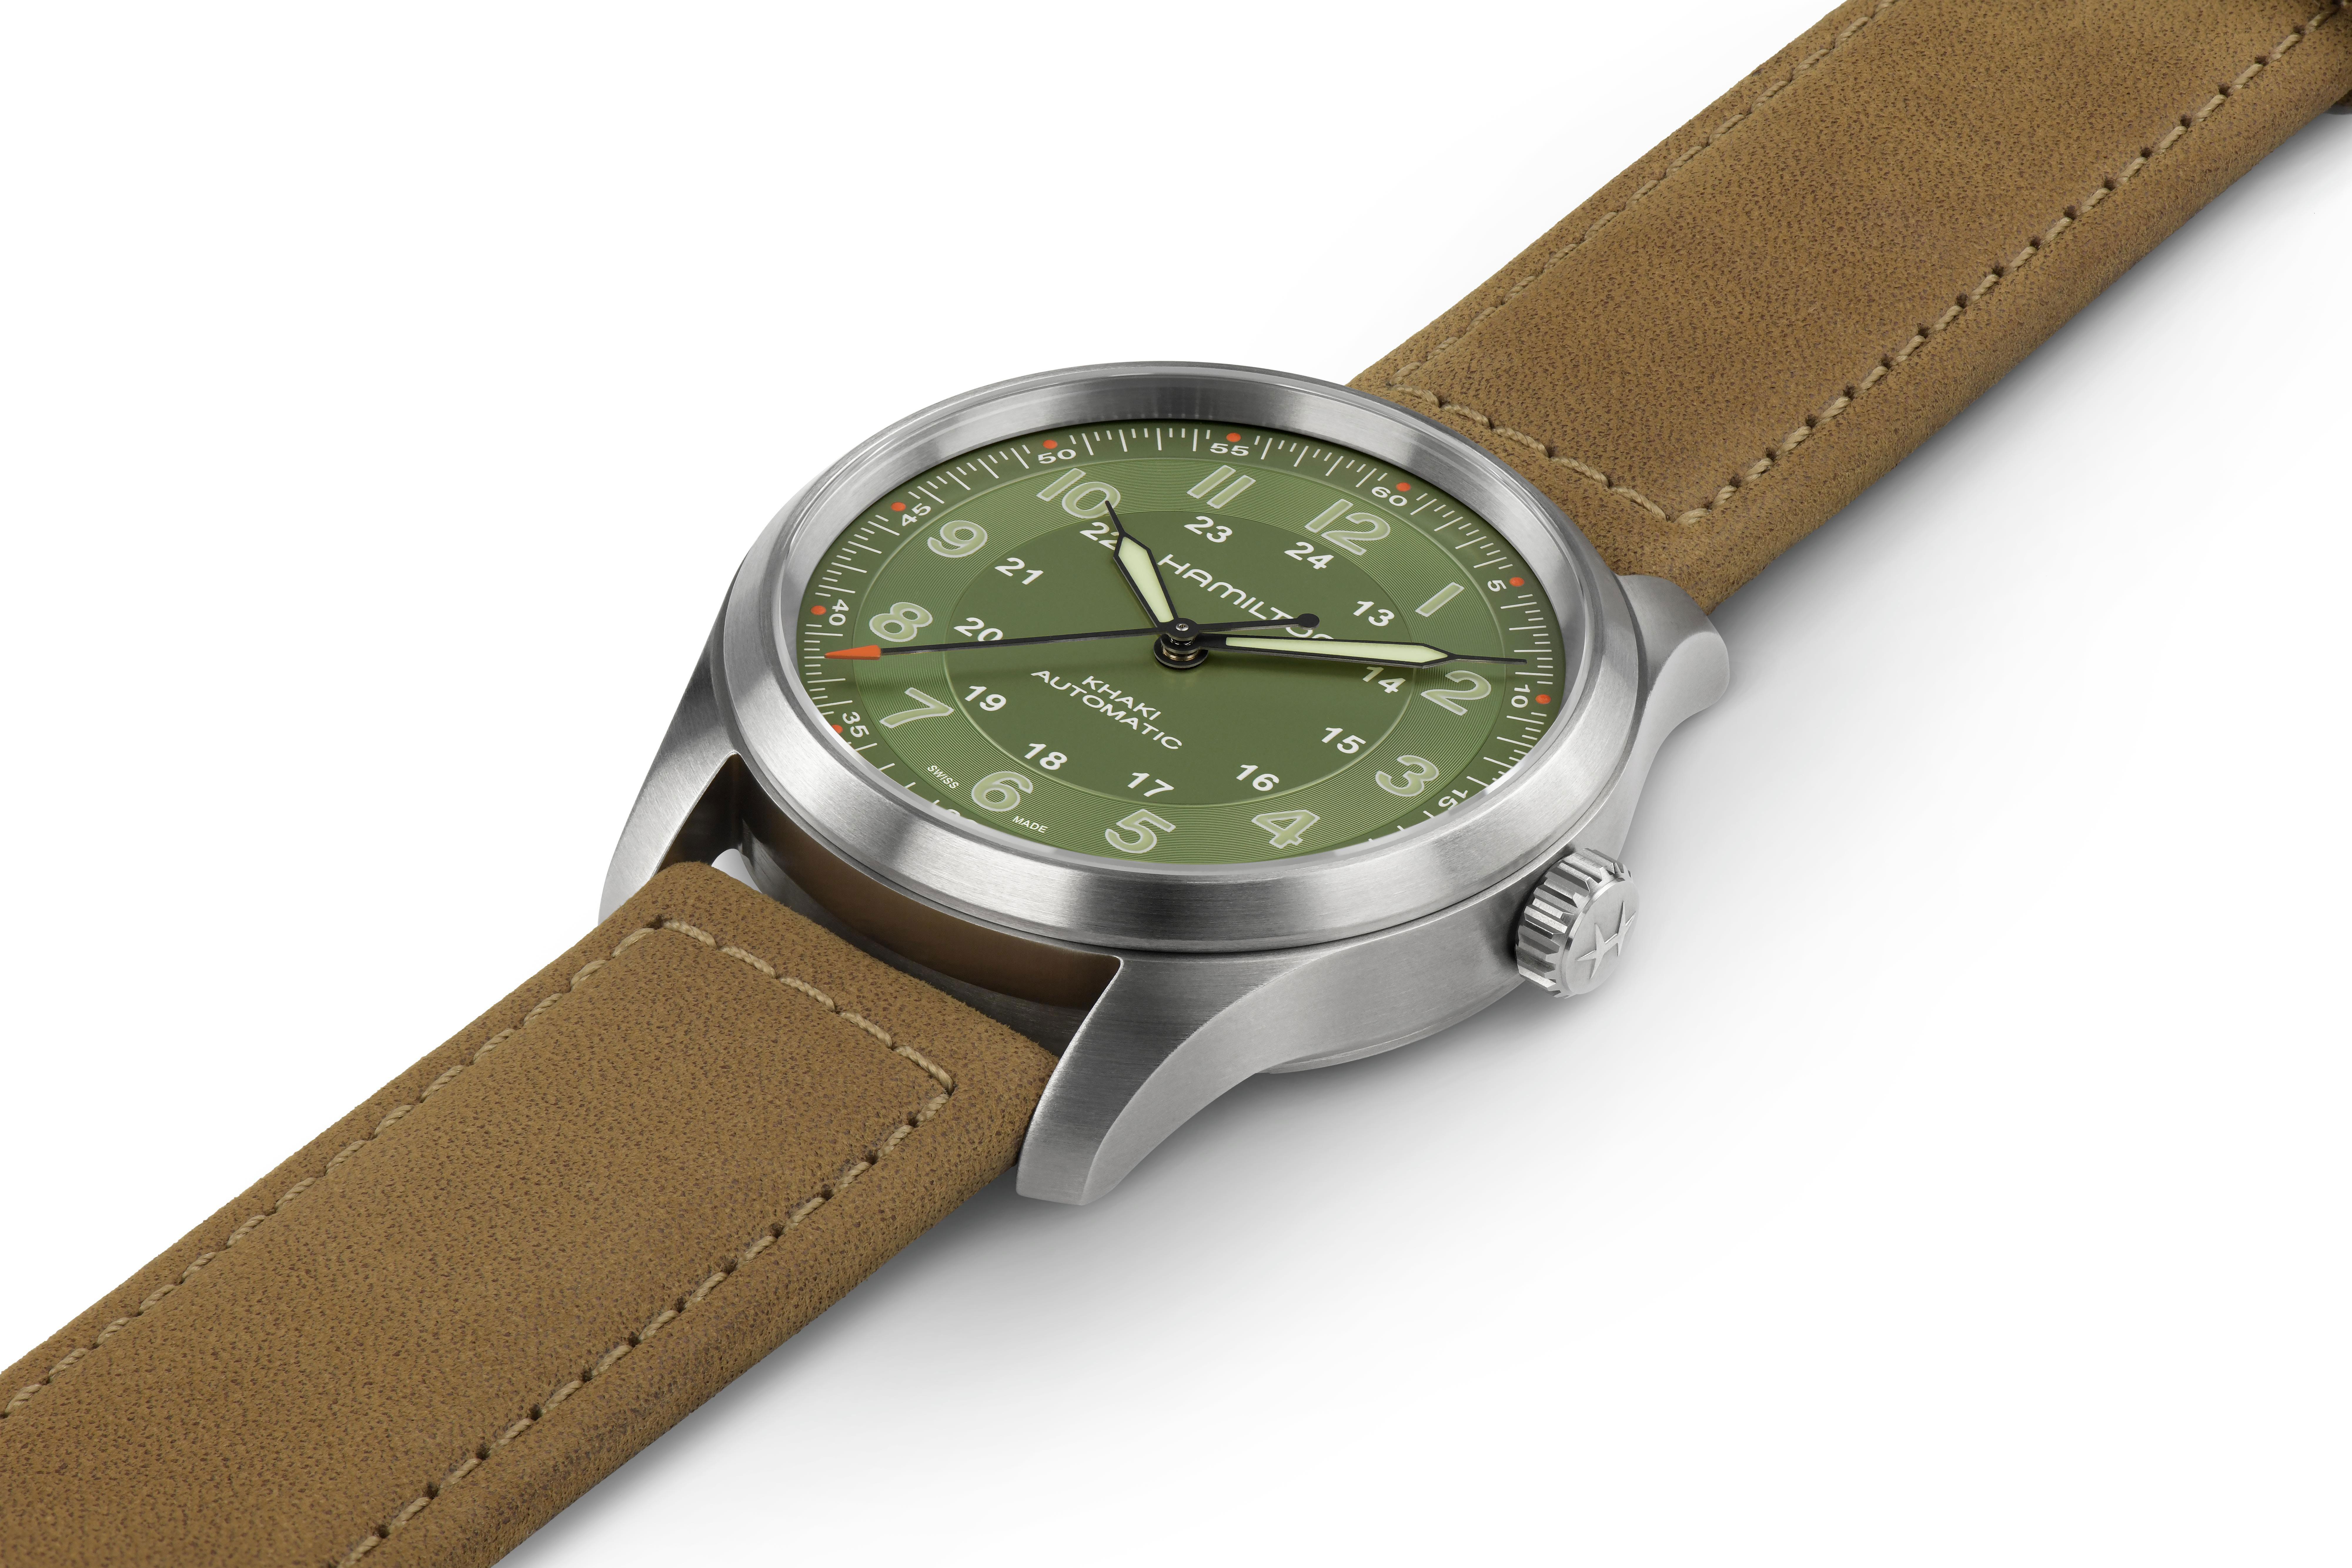 Hamilton's Khaki Field Titanium watch just got a serious upgrade